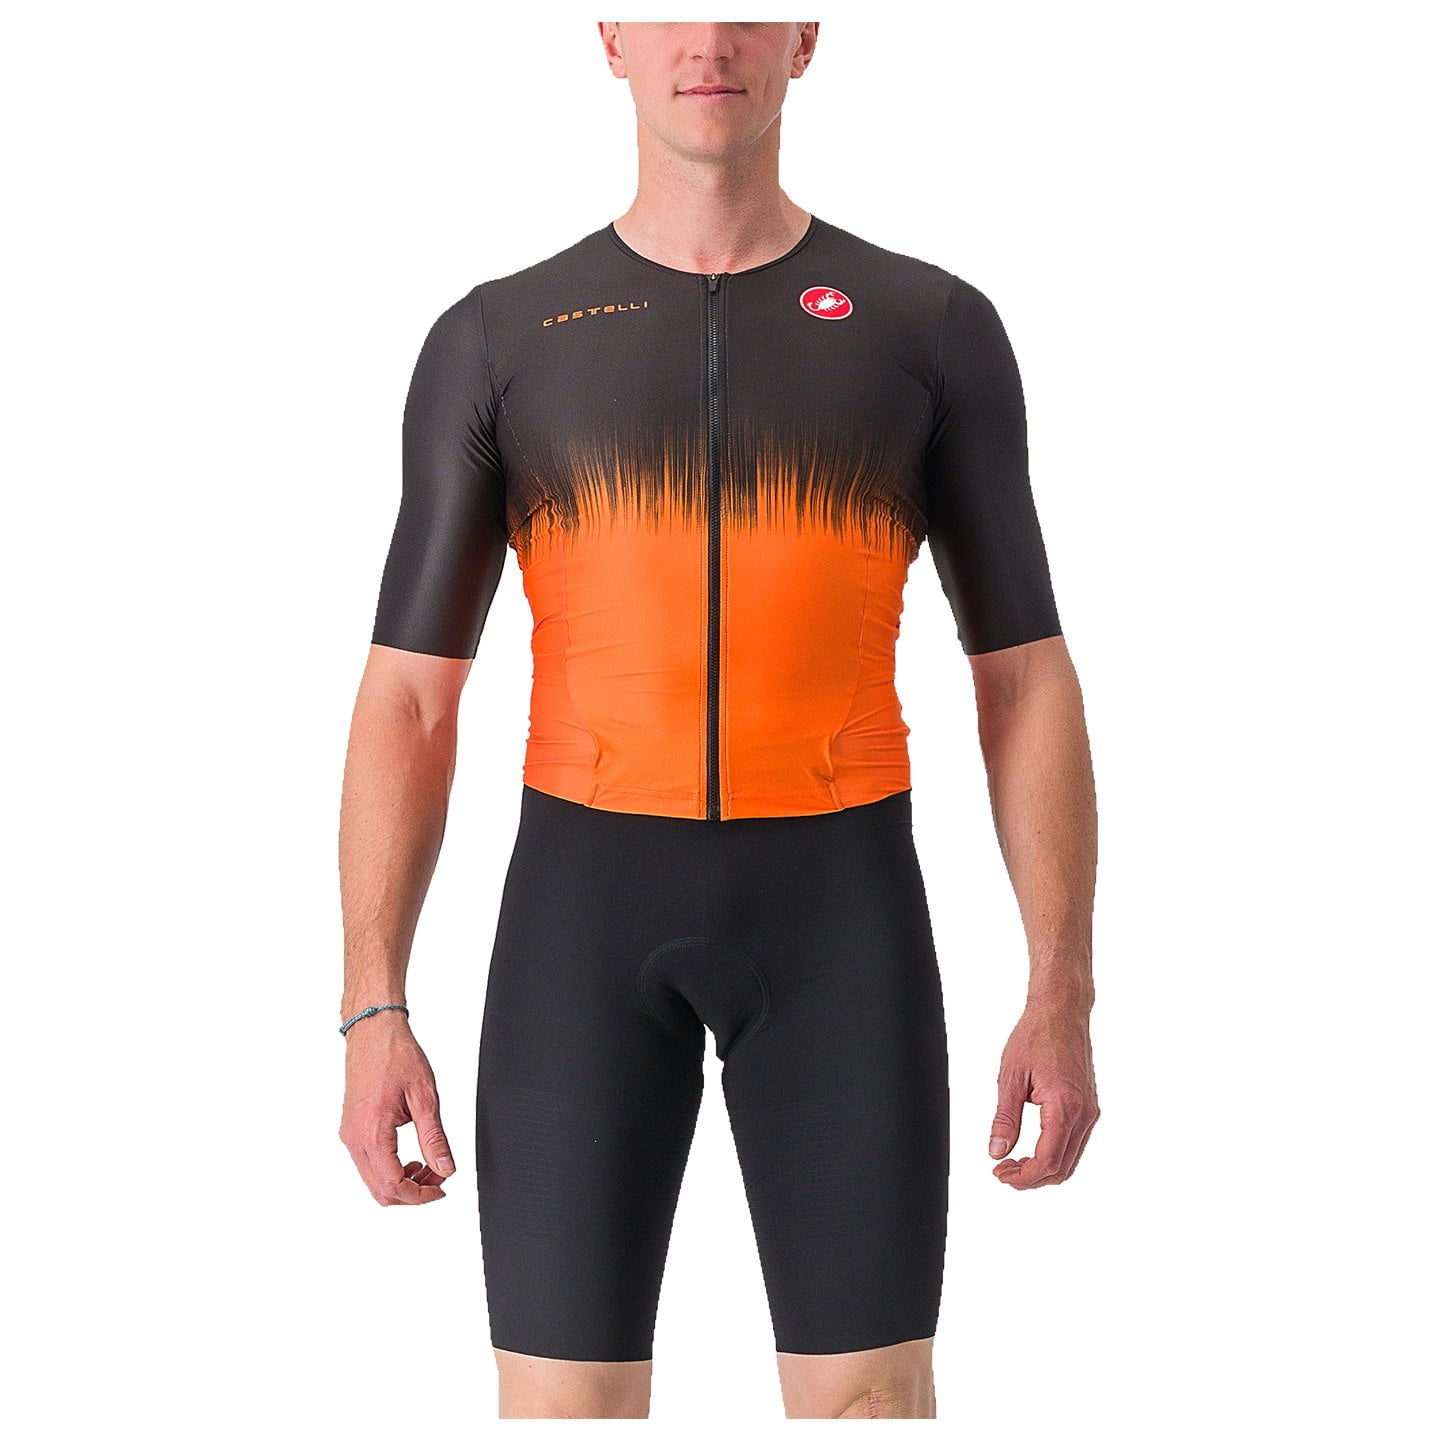 CASTELLI Sanremo Ultra Tri Suit Tri Suit, for men, size 2XL, Triathlon suit, Triathlon apparel